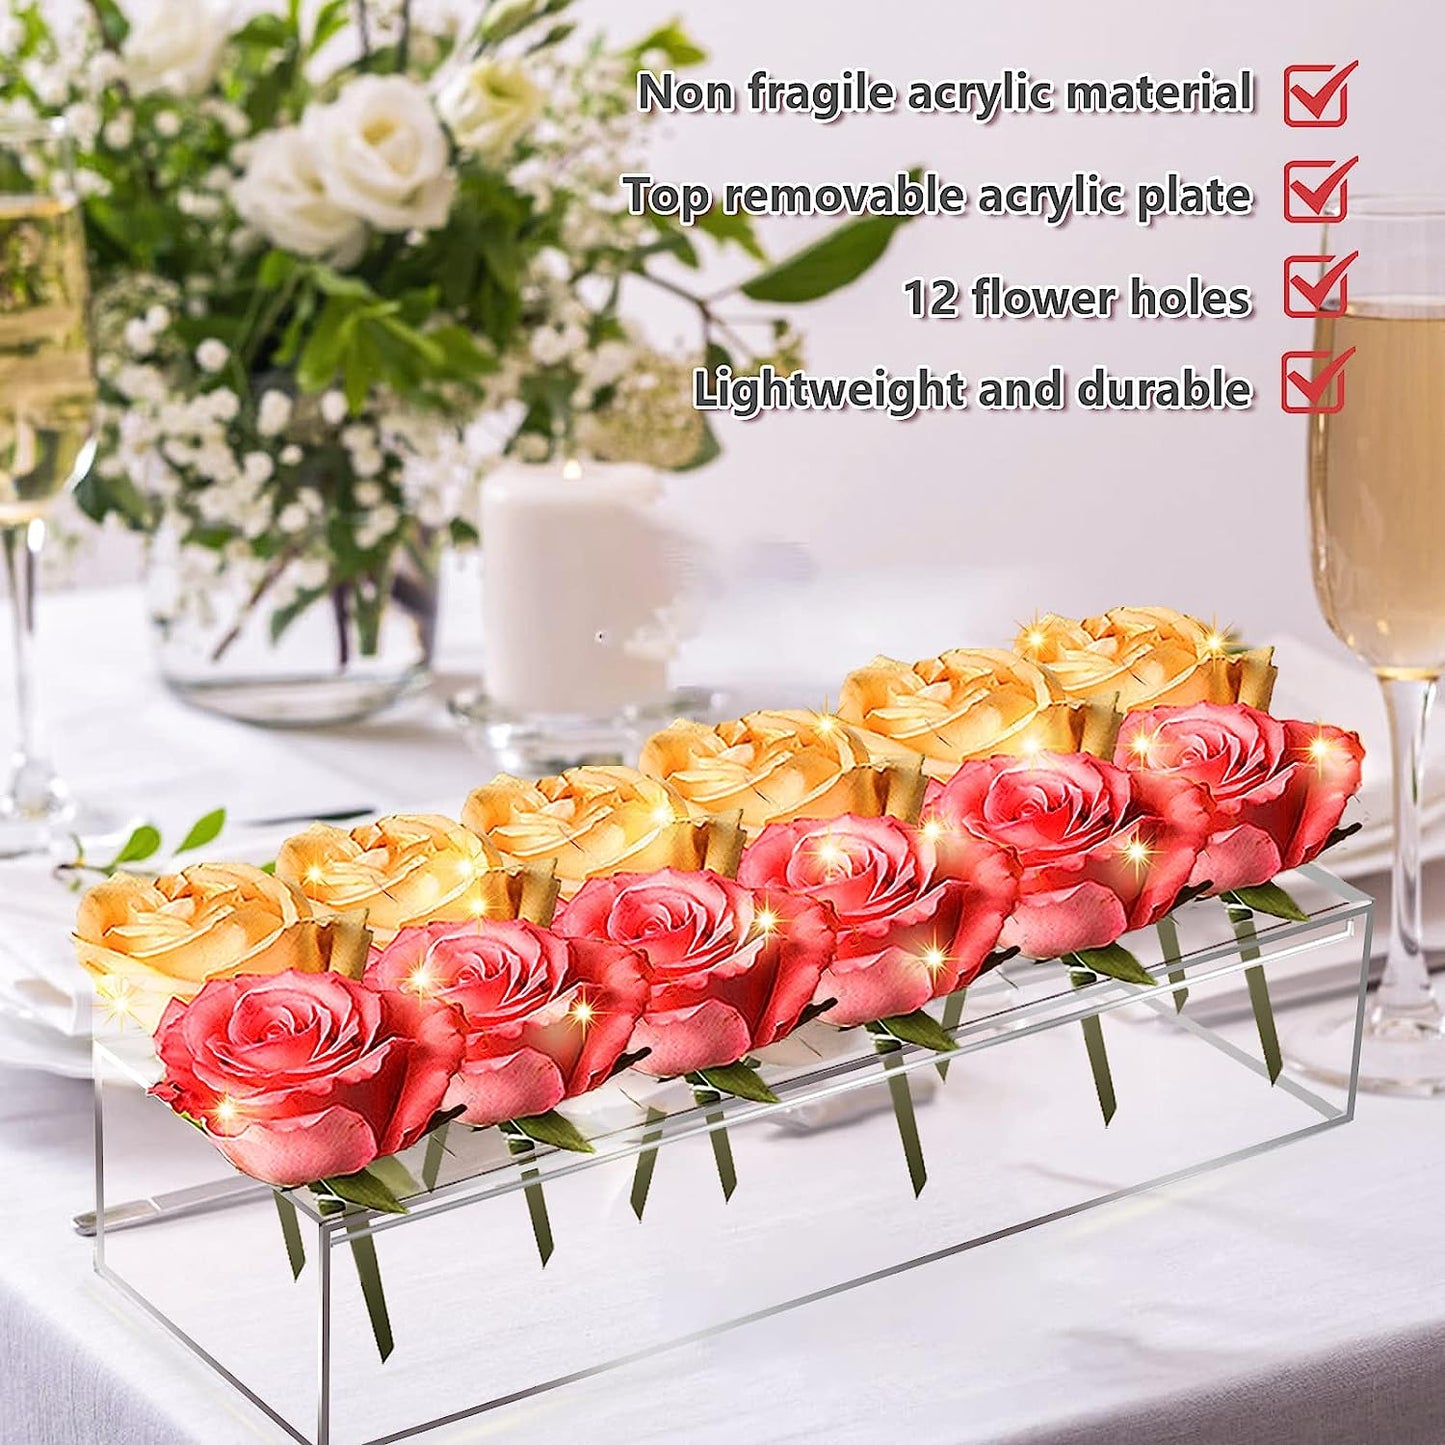 🔥BIG SALE - 50% OFF🔥Blooming Treasures - Blossom Keeper Acrylic Vase